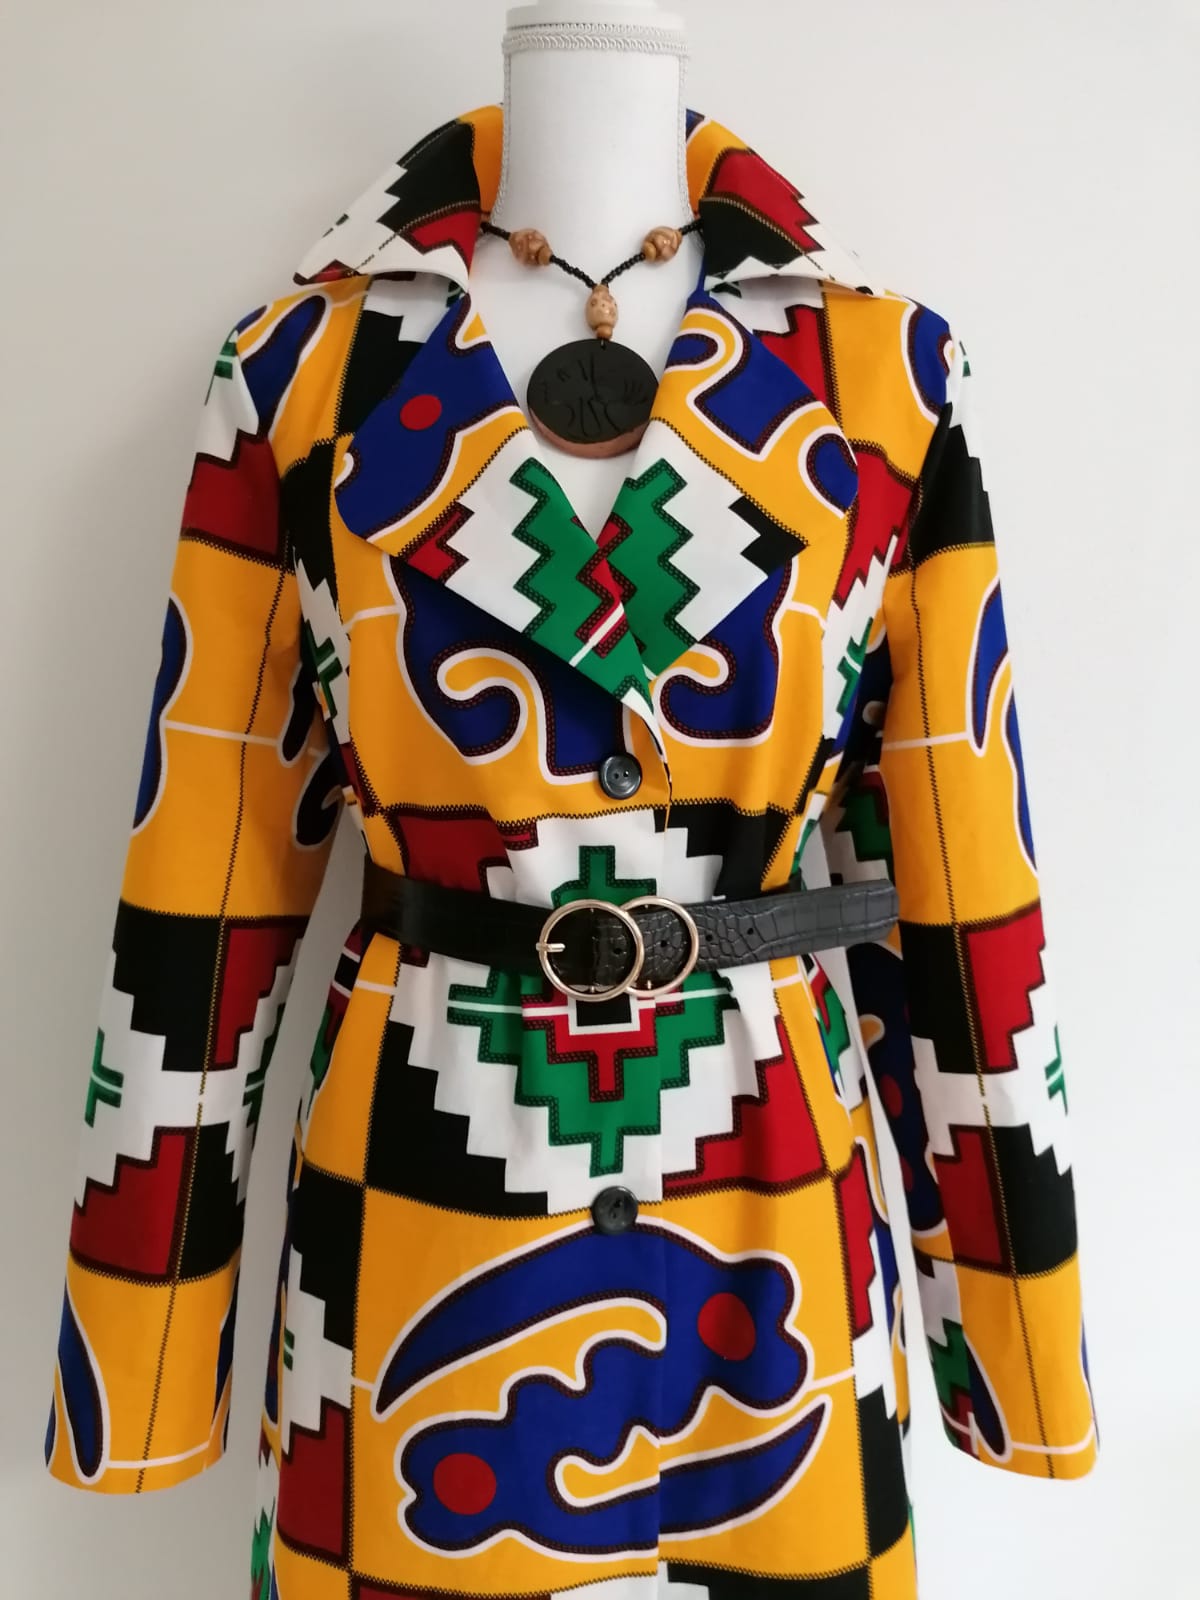 Podzimní kabát kente Ghana | Coat from ghanian kente fabric for autumn